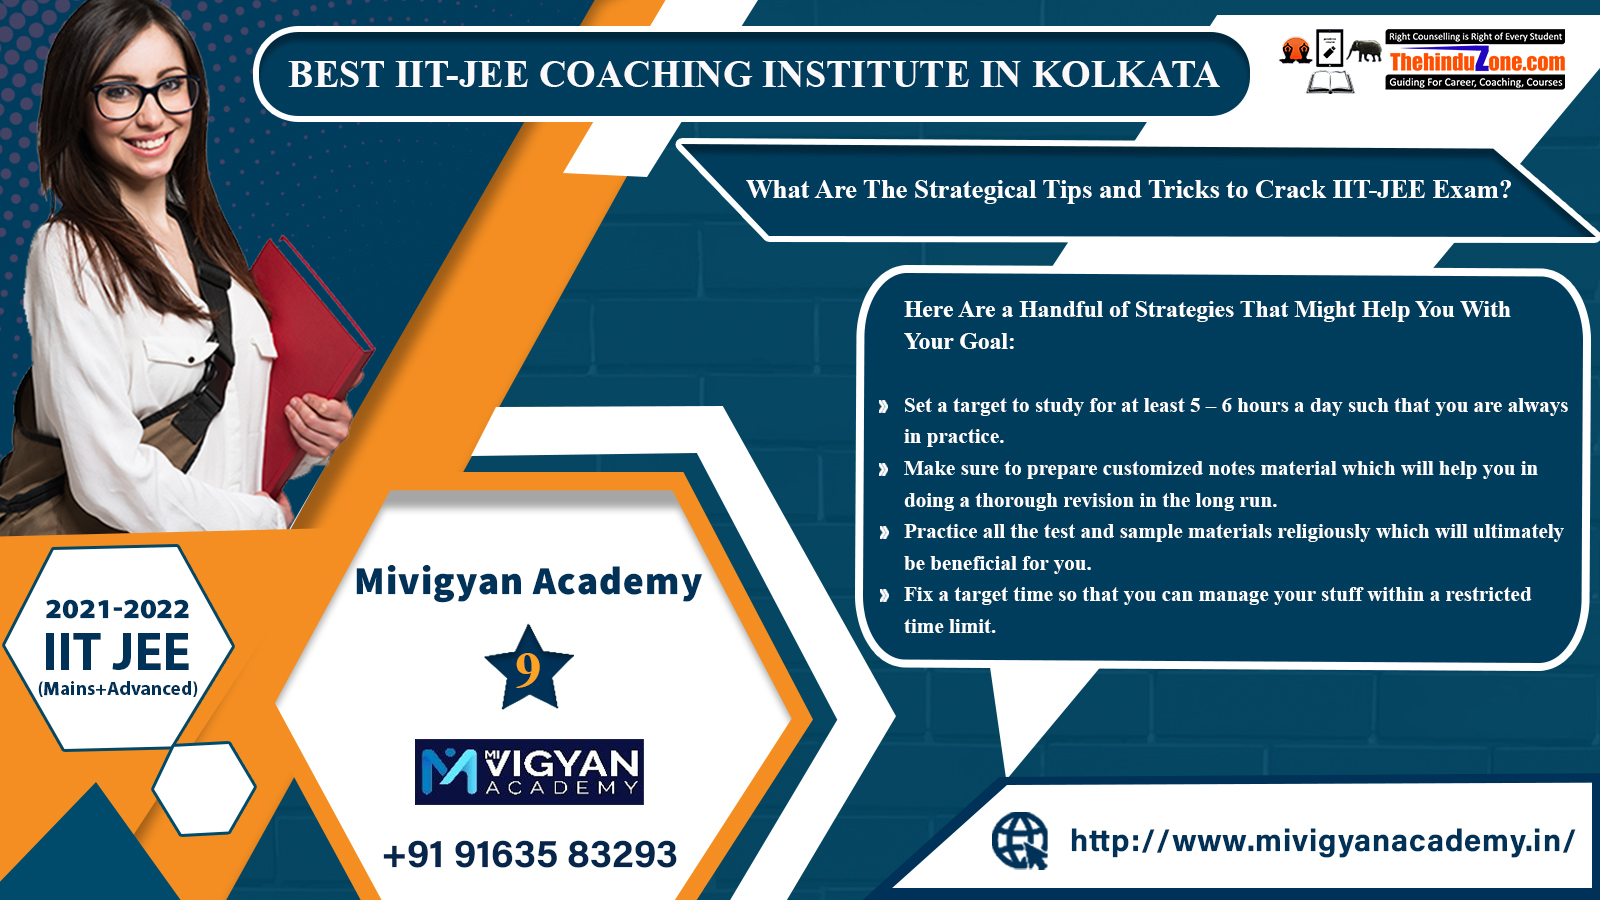 best iit jee Coaching In Kolkata